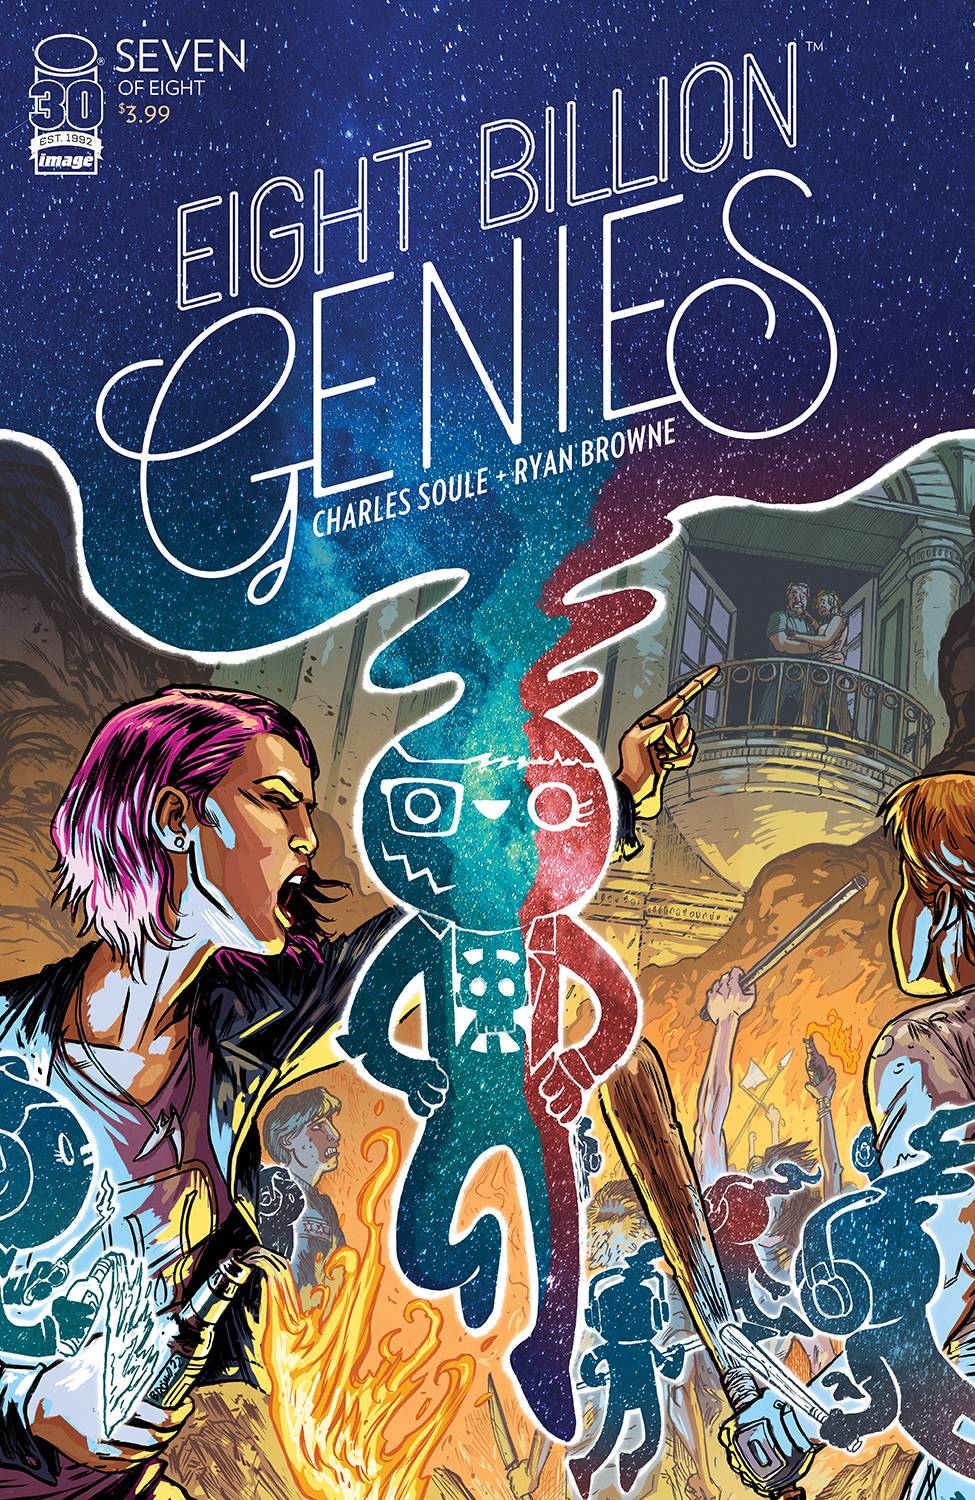 Eight Billion Genies #7 (of 8) Cvr A Browne (MR) - State of Comics